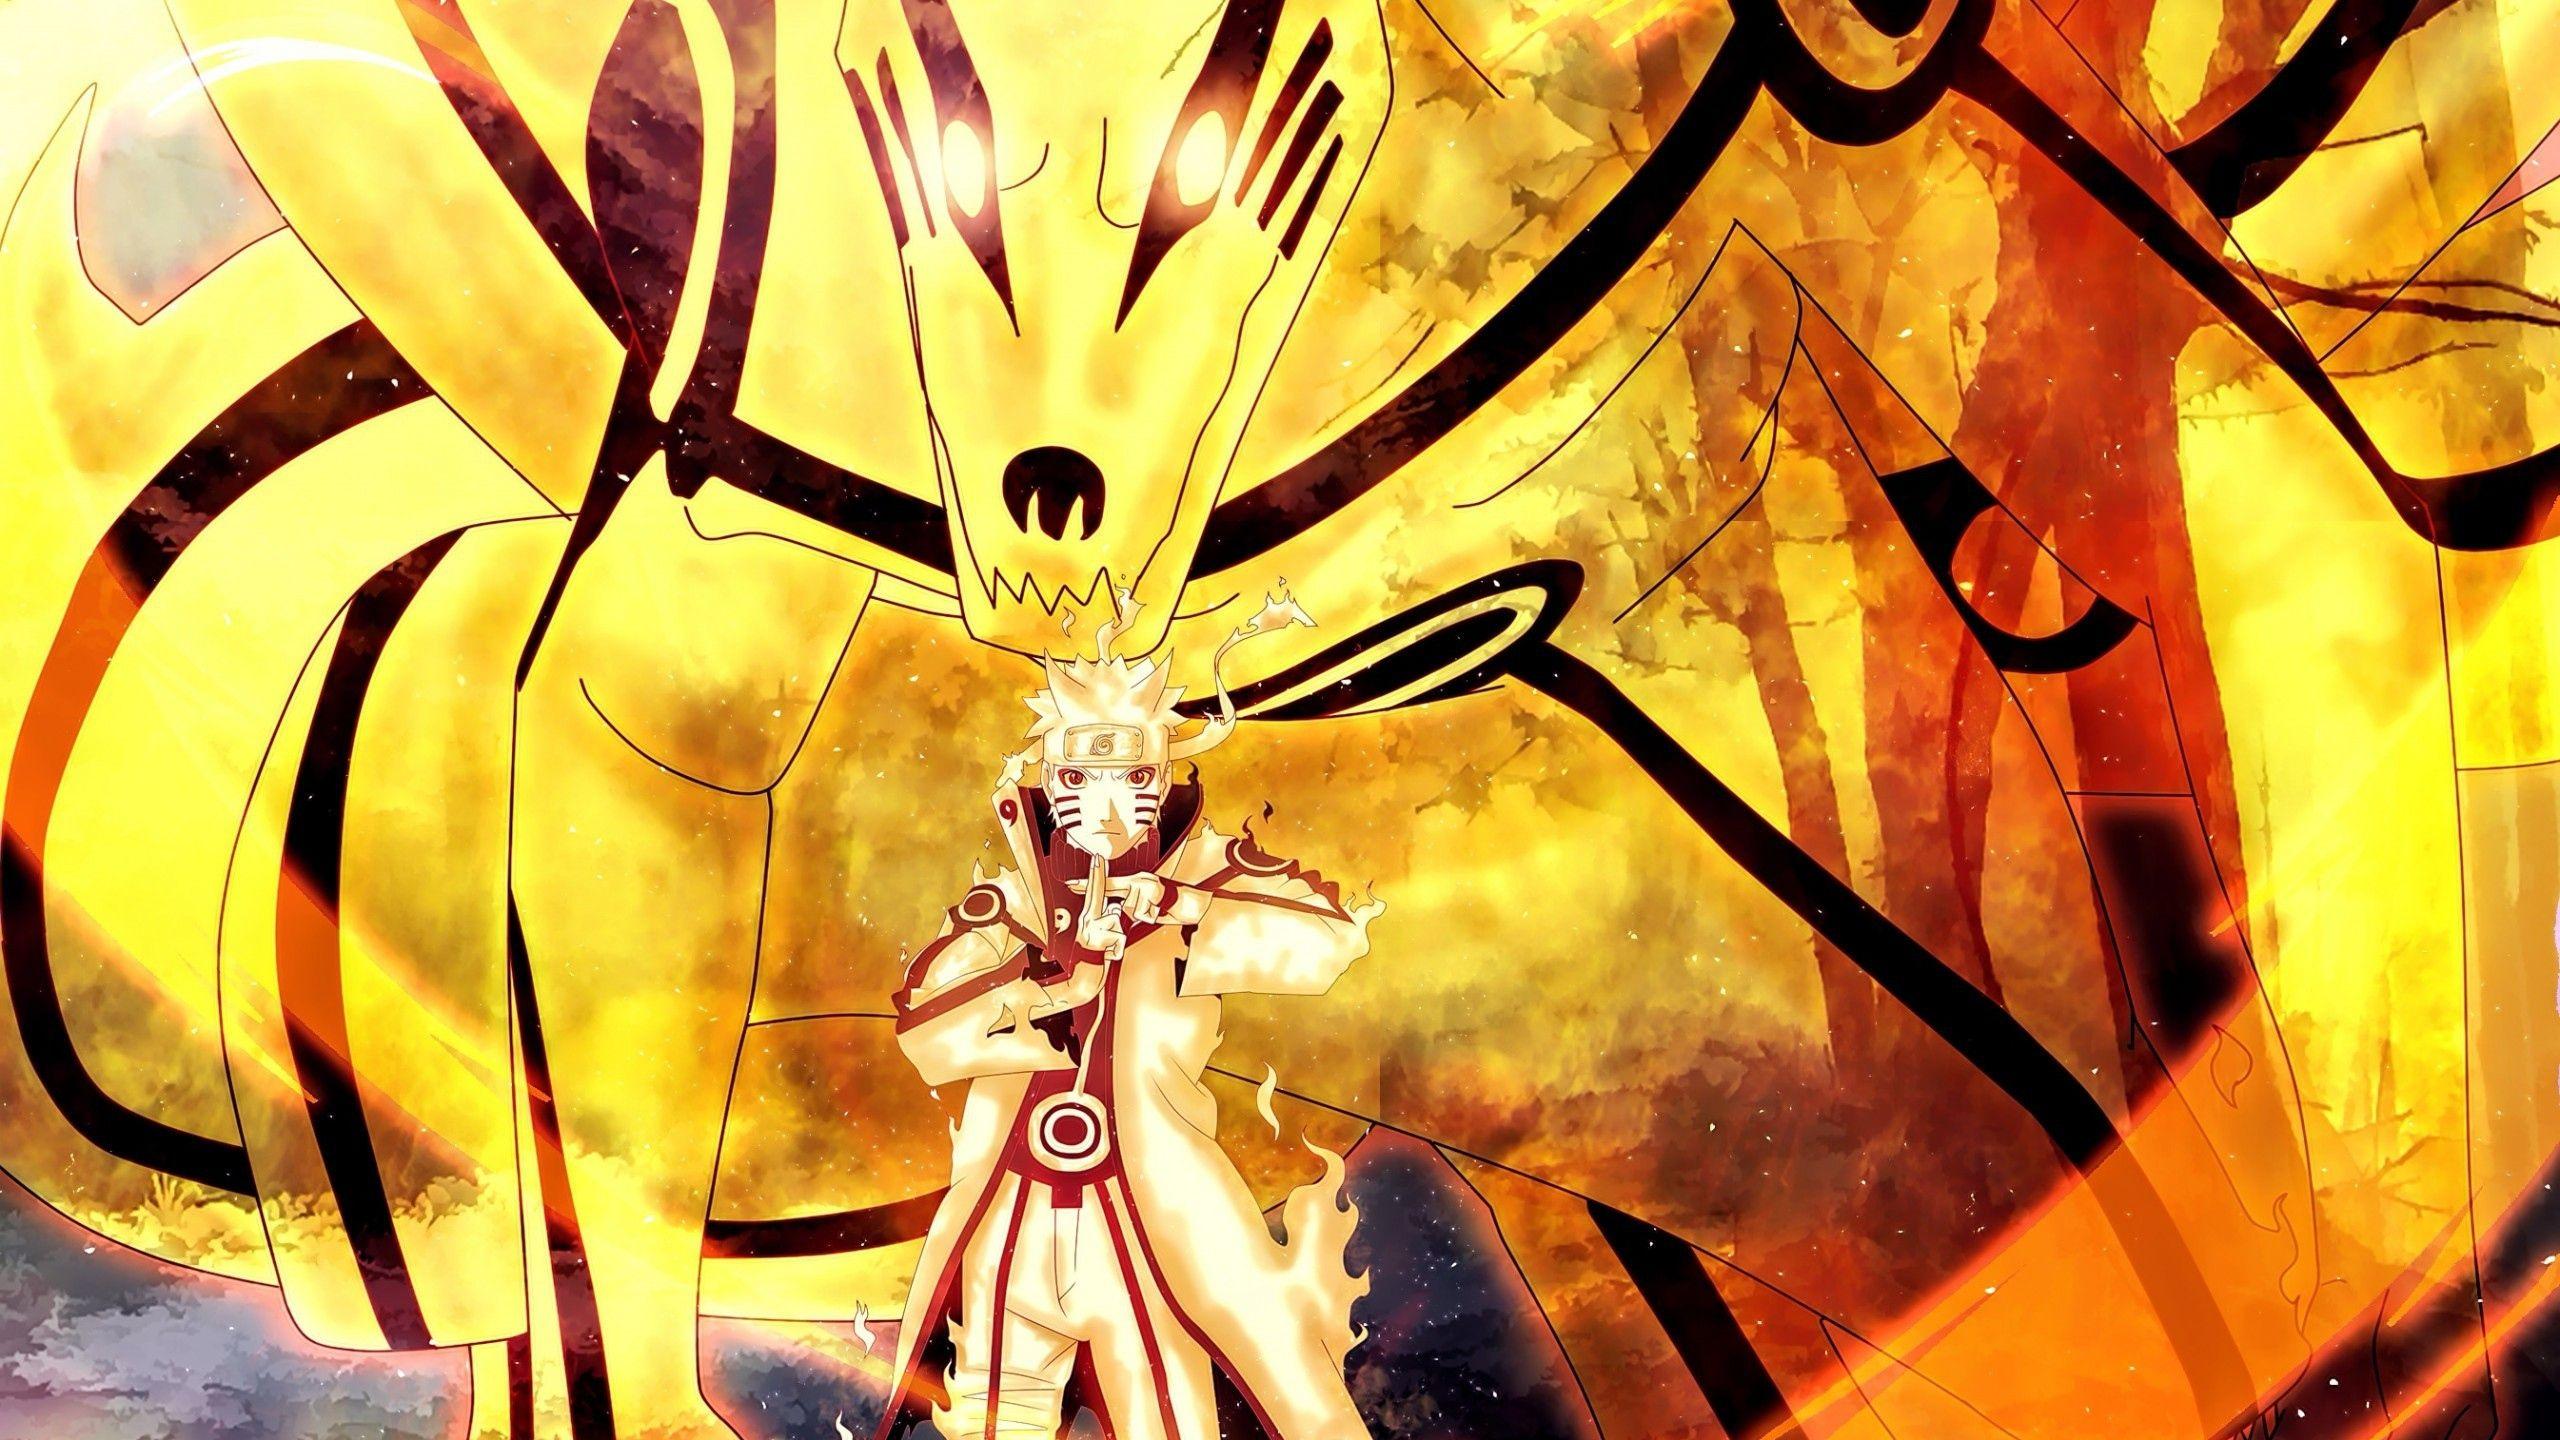 Naruto Sage Of The Six Paths Wallpaper